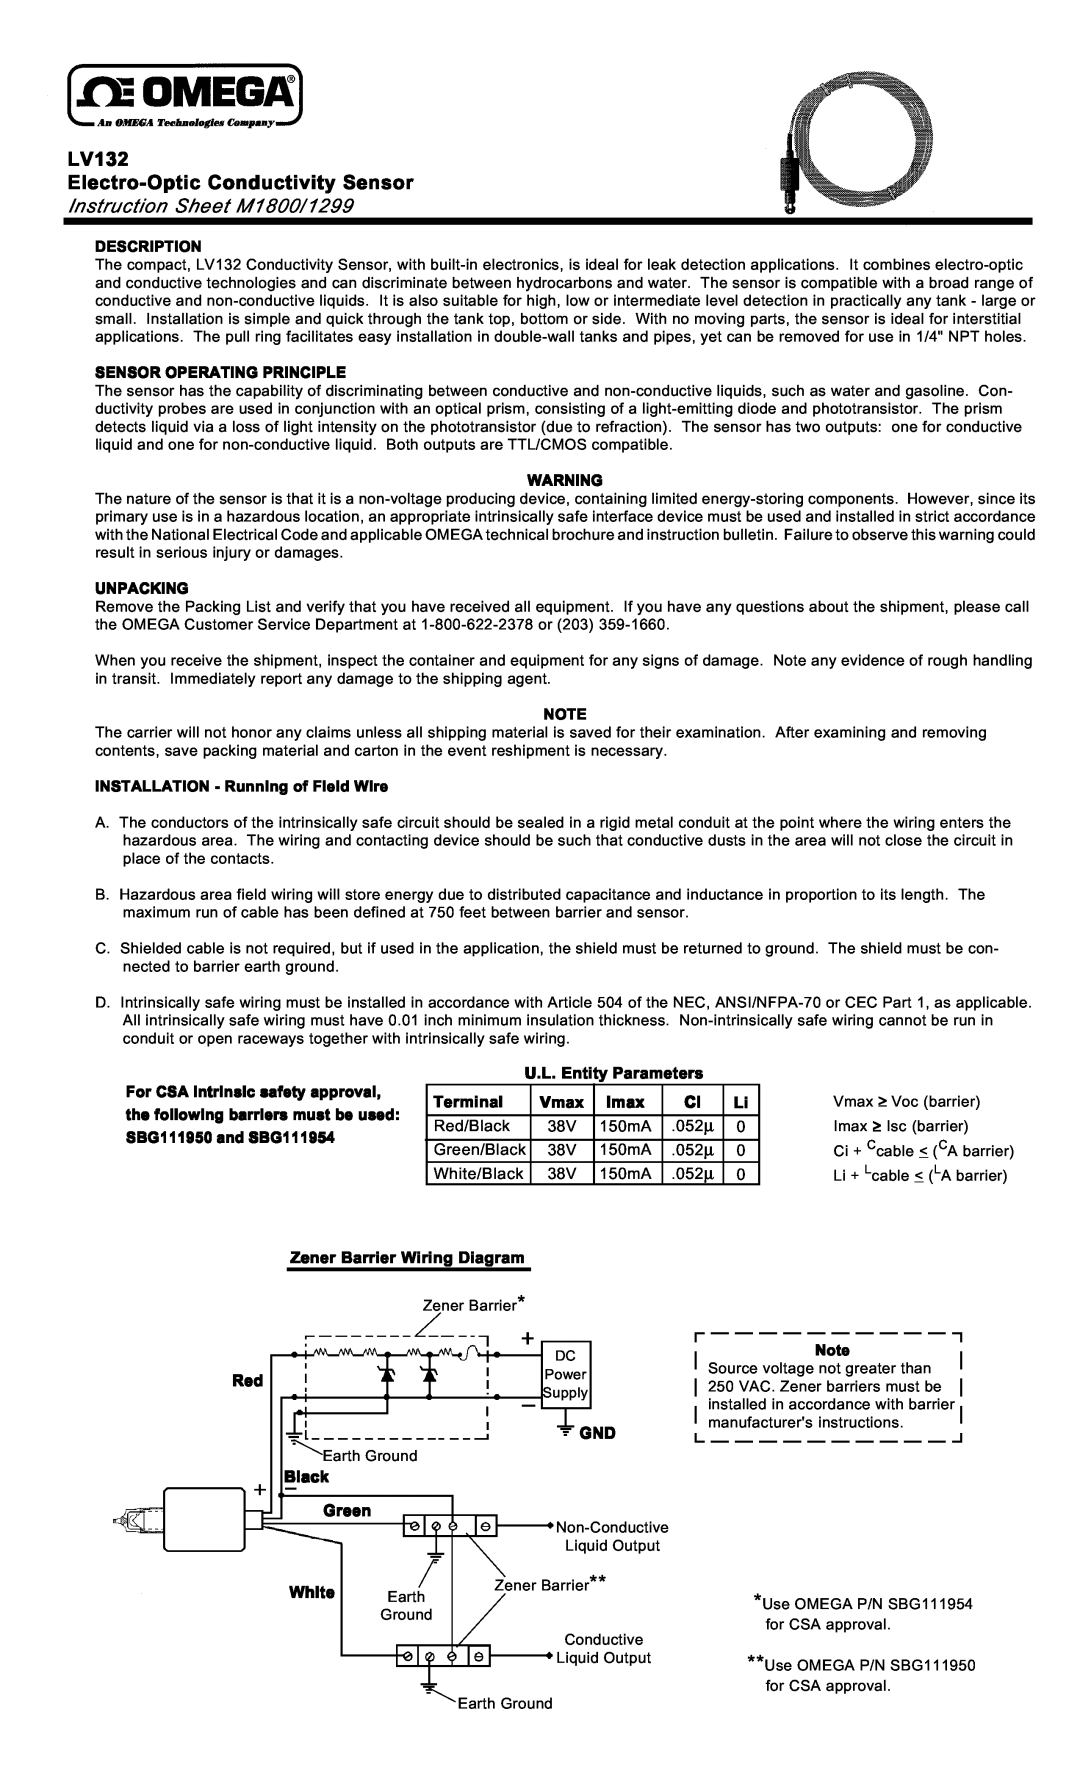 Omega Vehicle Security instruction sheet LV132 Electro-Optic Conductivity Sensor, Instruction Sheet M1800/1299, Vmax 